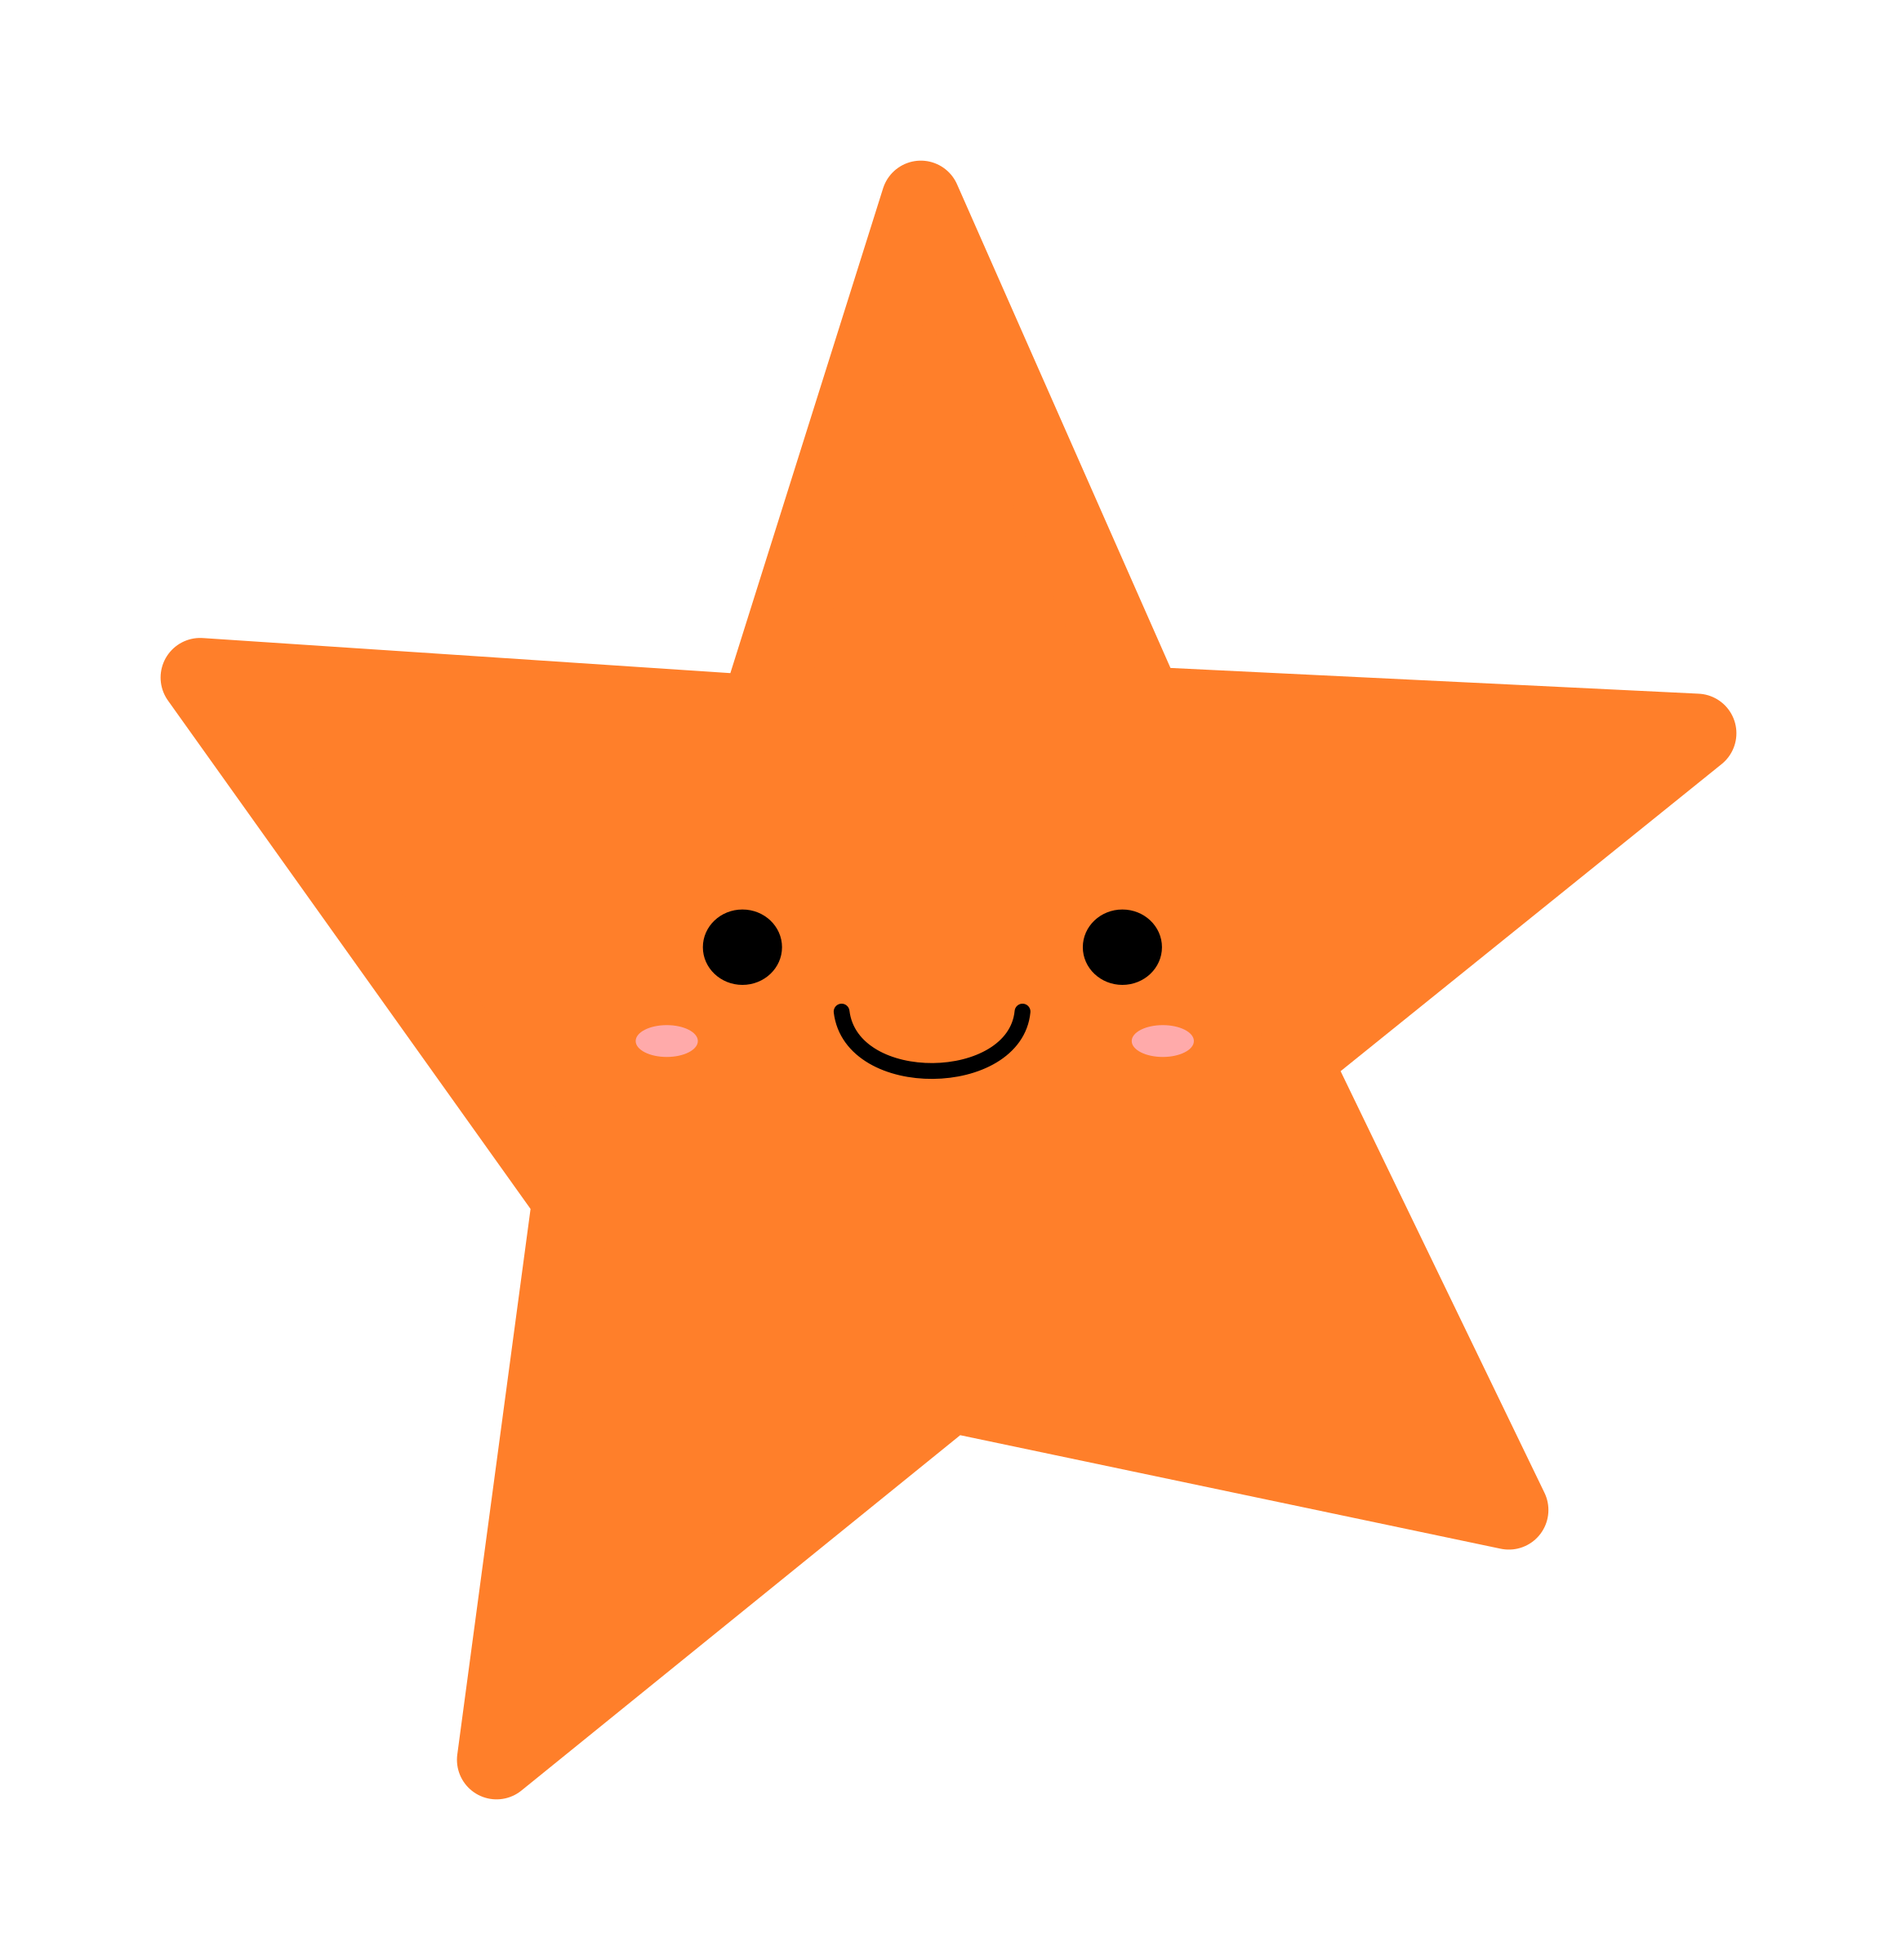 Orange Star vector clipart image - Free stock photo - Public Domain photo - CC0 Images